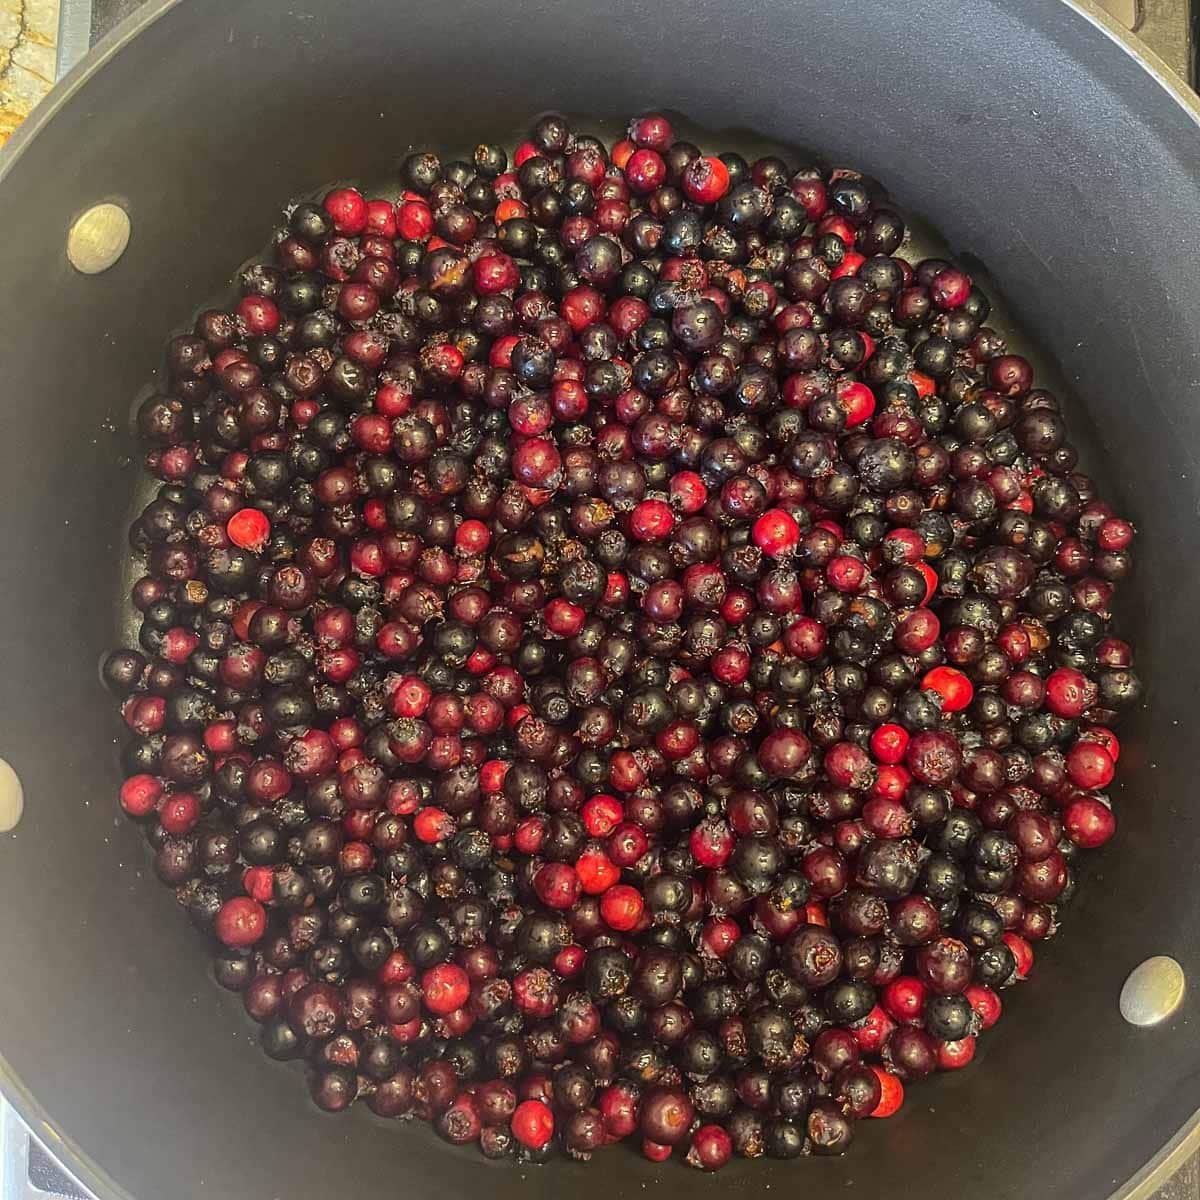 Saskatoon berries in a pot